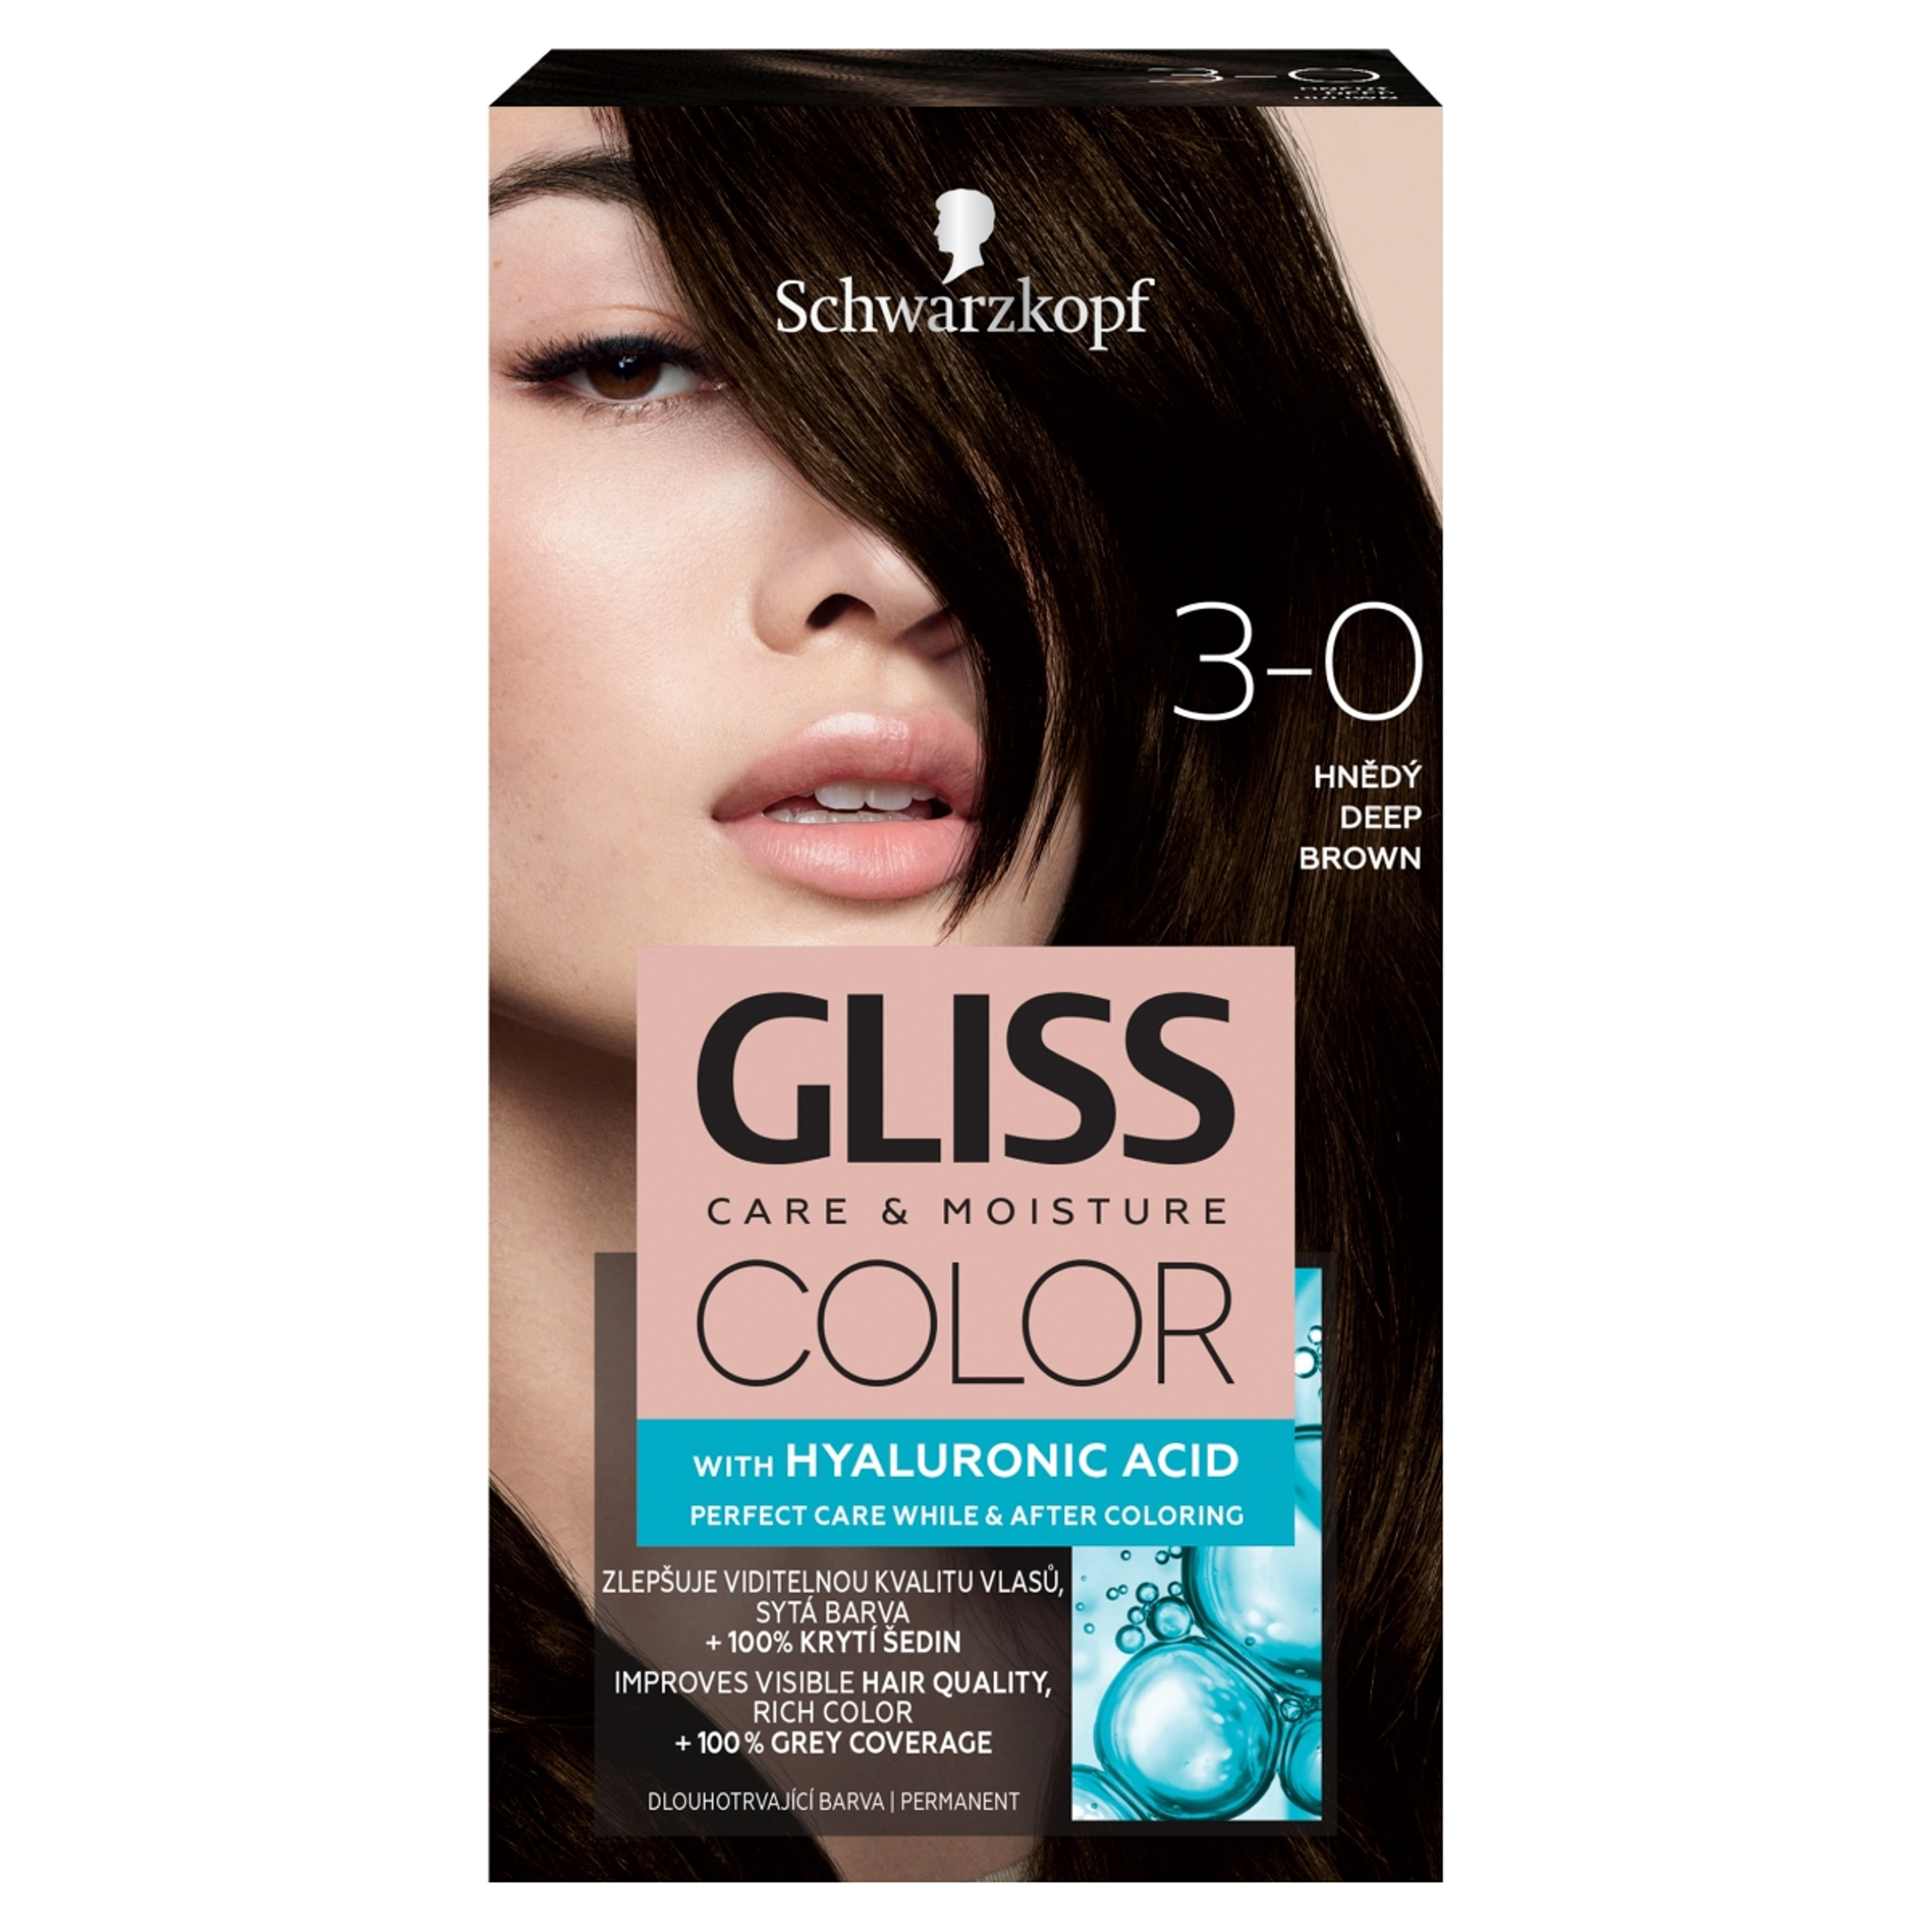 Gliss Color tartós hajfesték 3-0 Mélybarna - 1 db-1